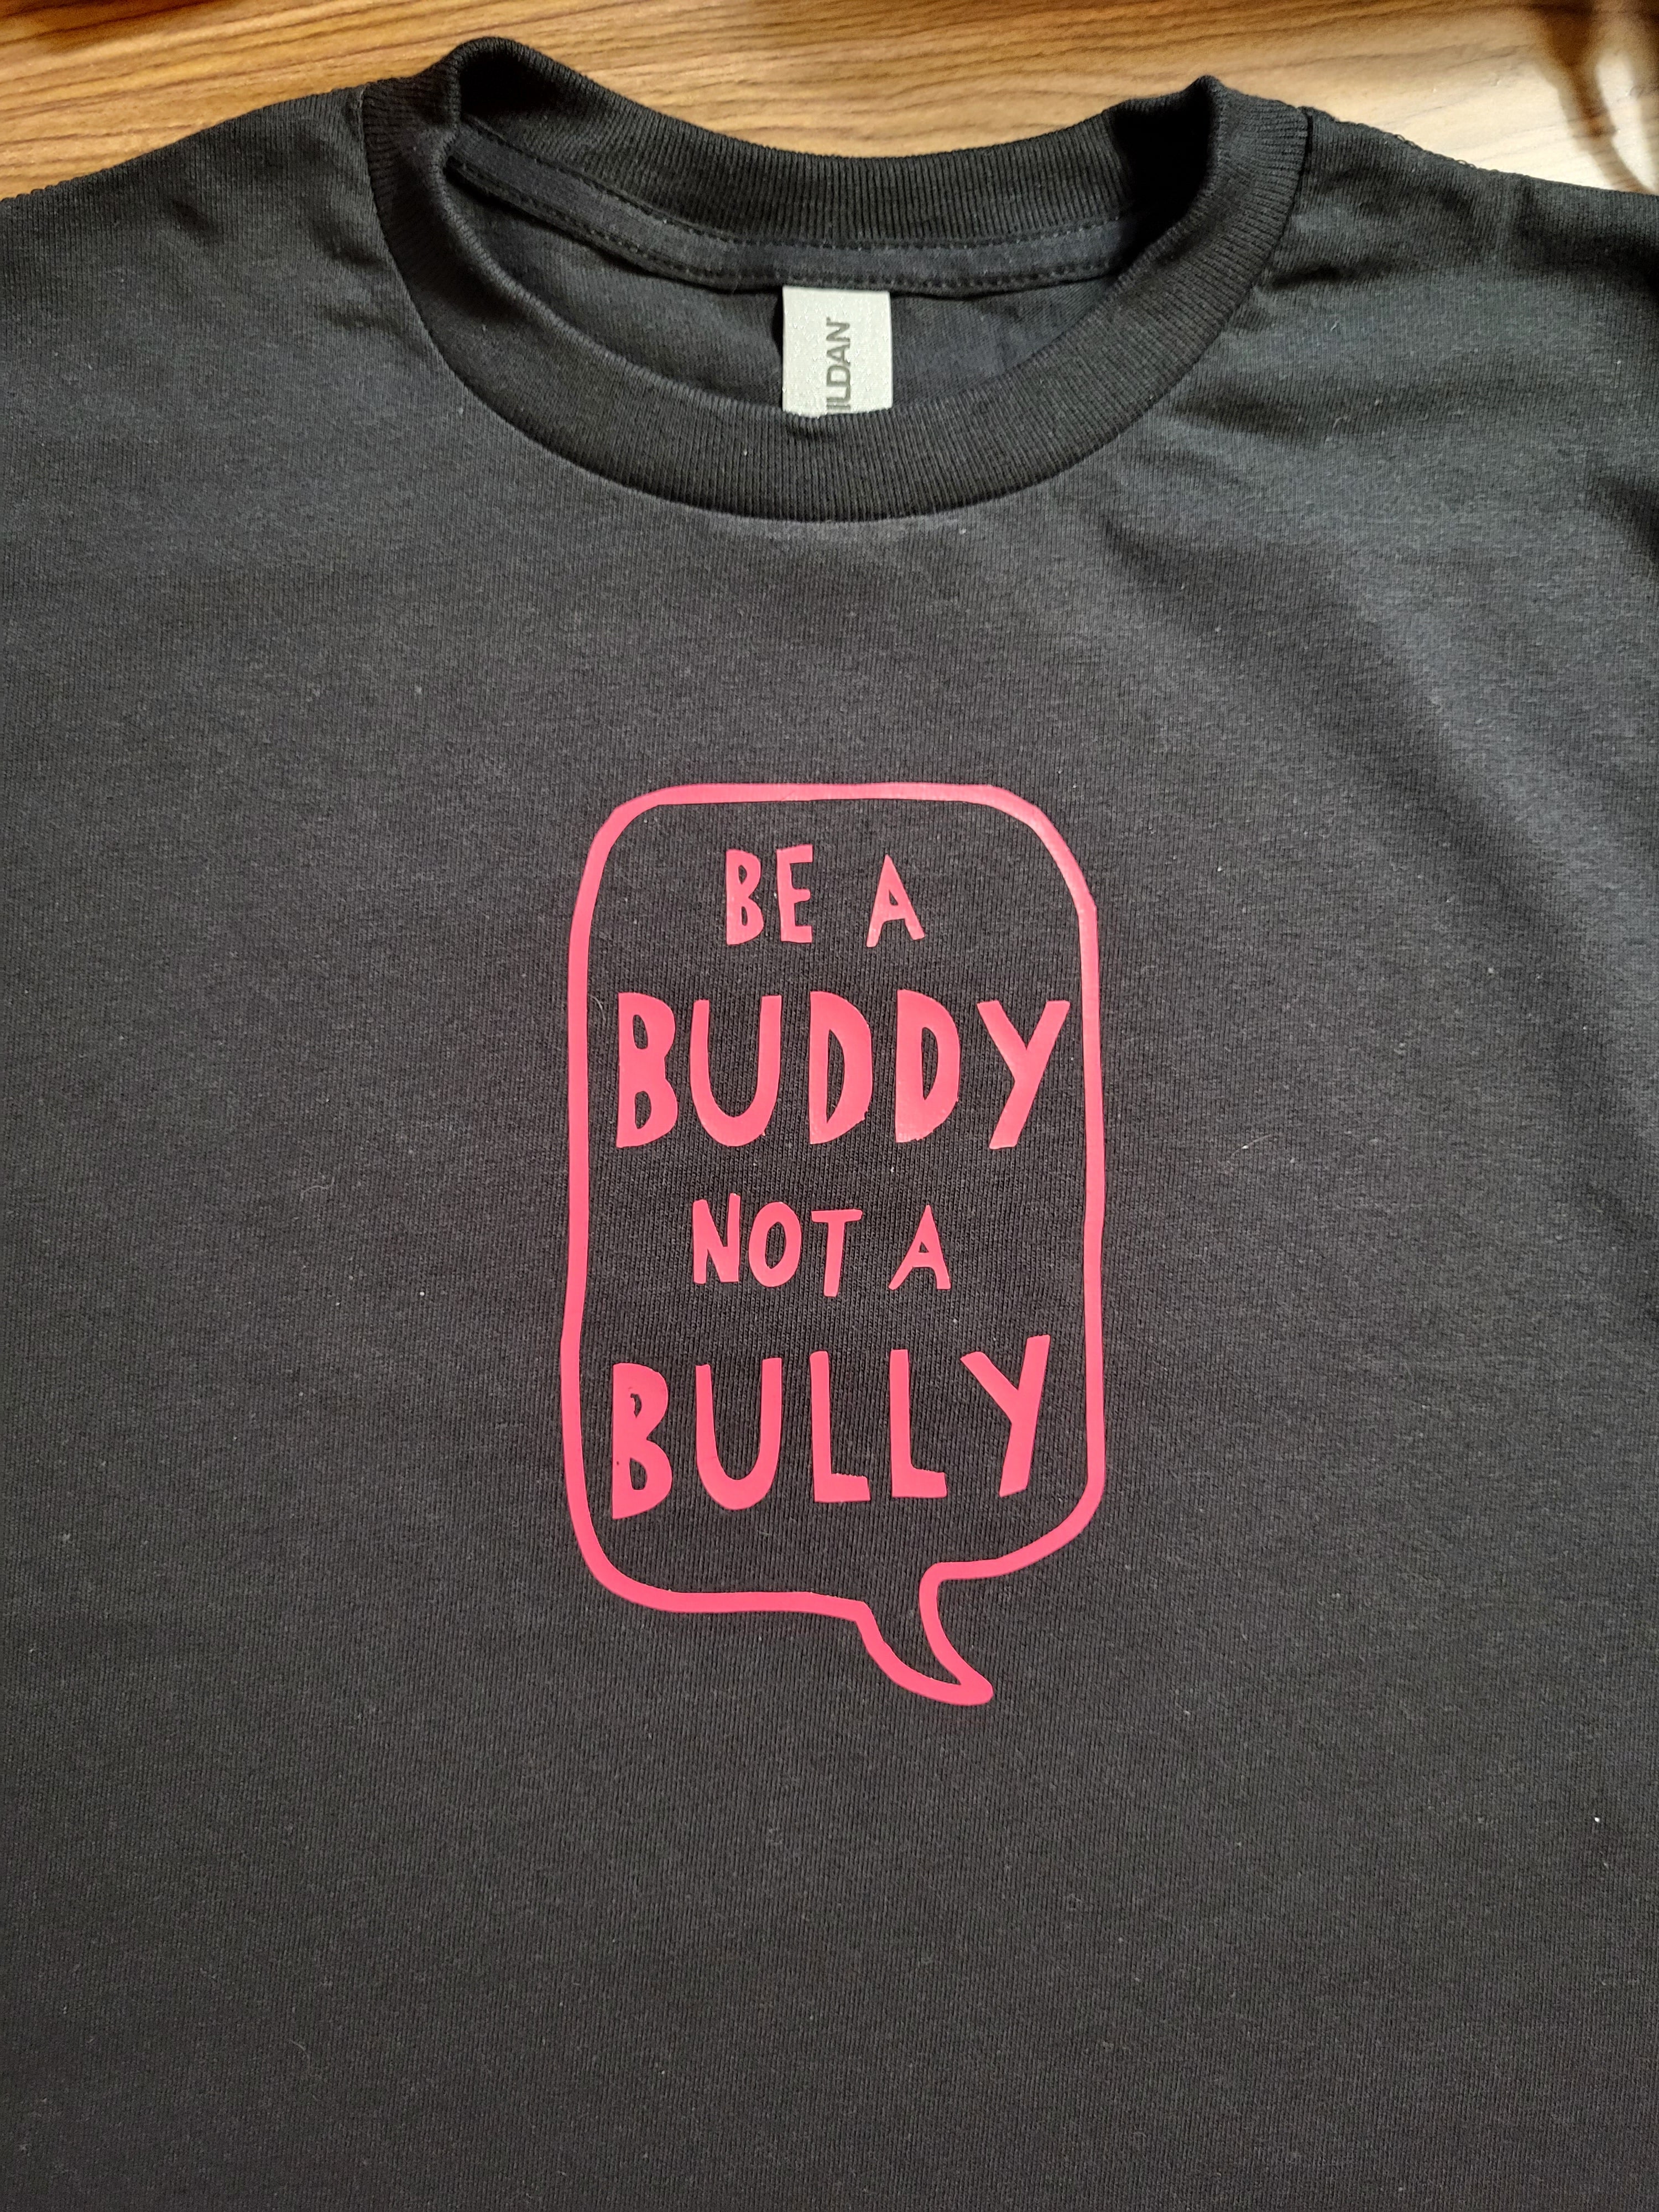 Be a buddy not a bully | Pink Shirt Day | T-shirt